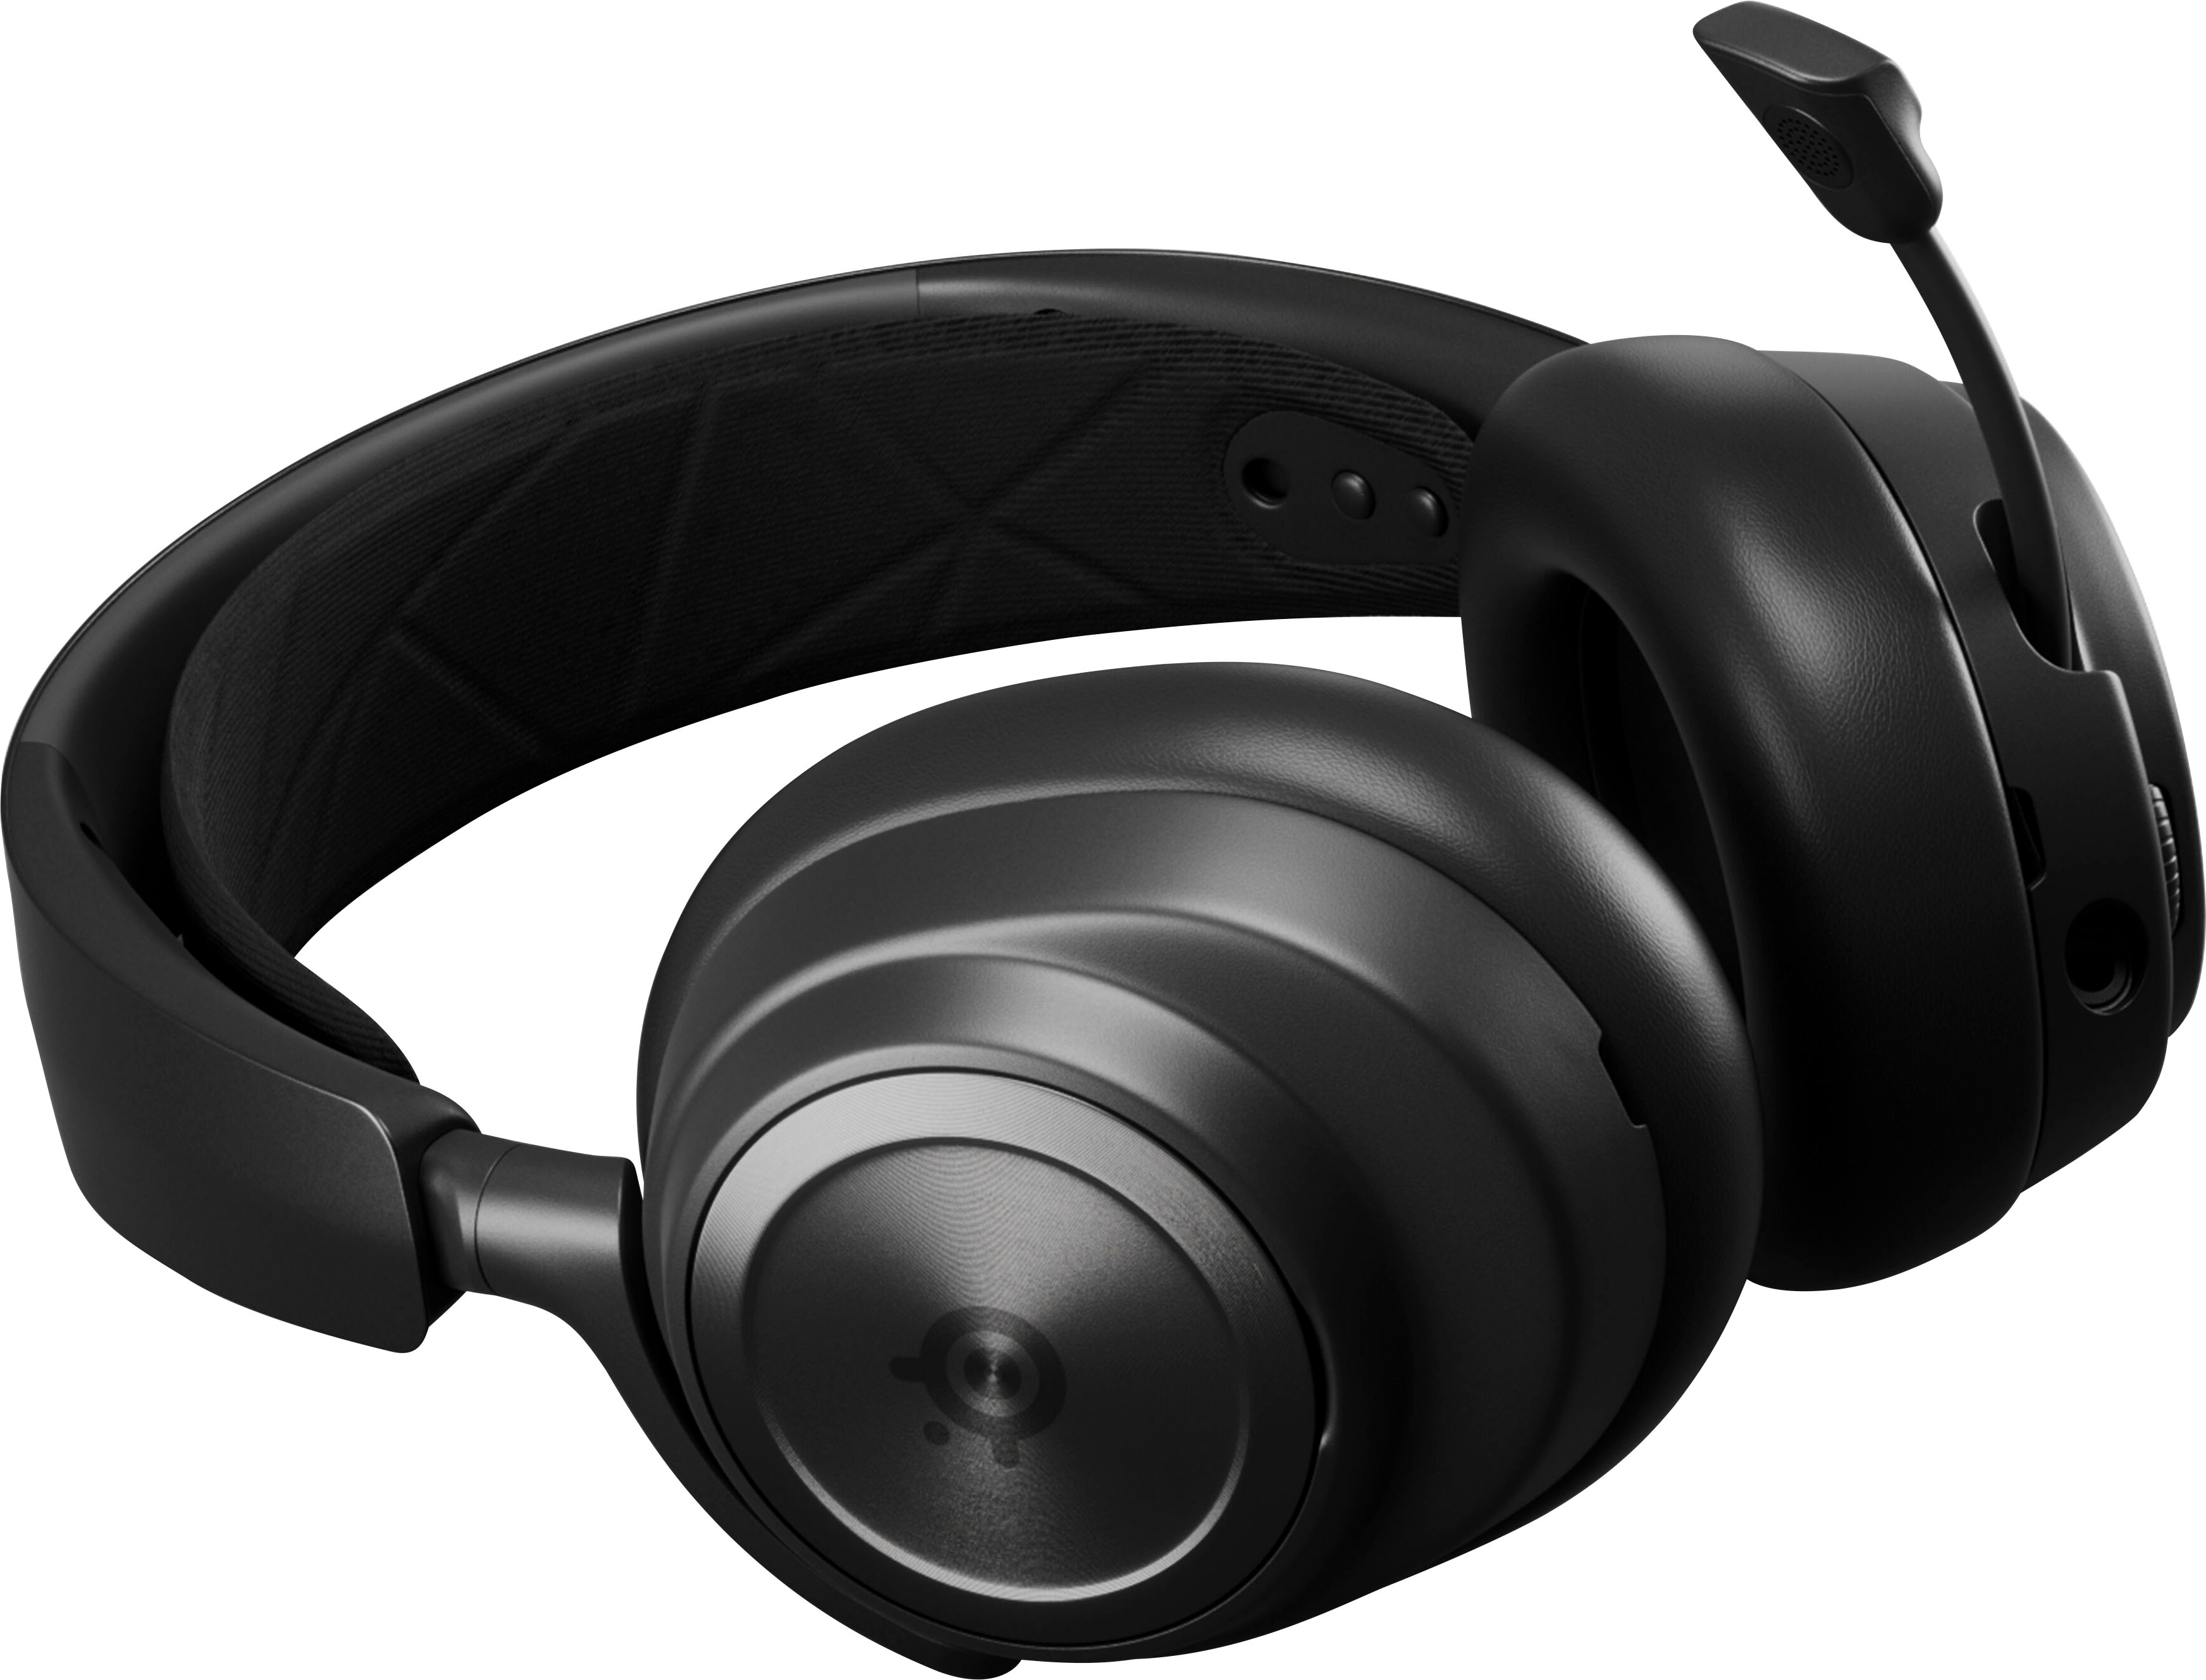 SteelSeries Arctis Nova Pro Wireless Multi Gaming Headset Active 